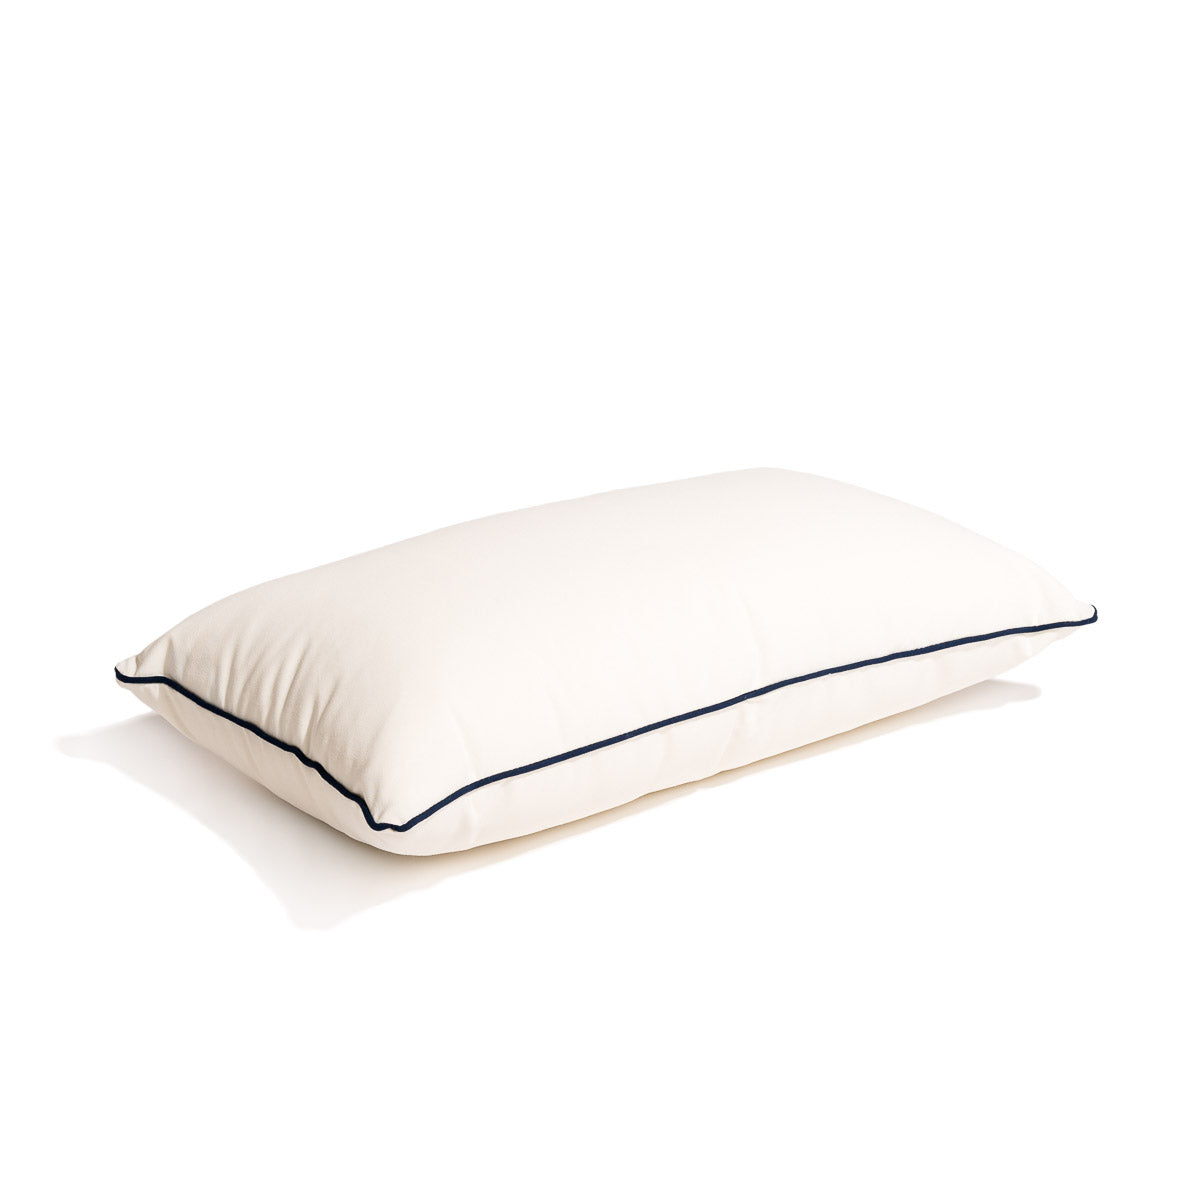 The Rectangle Throw Pillow - Rivie White Rectangle Throw Pillow Business & Pleasure Co Aus 